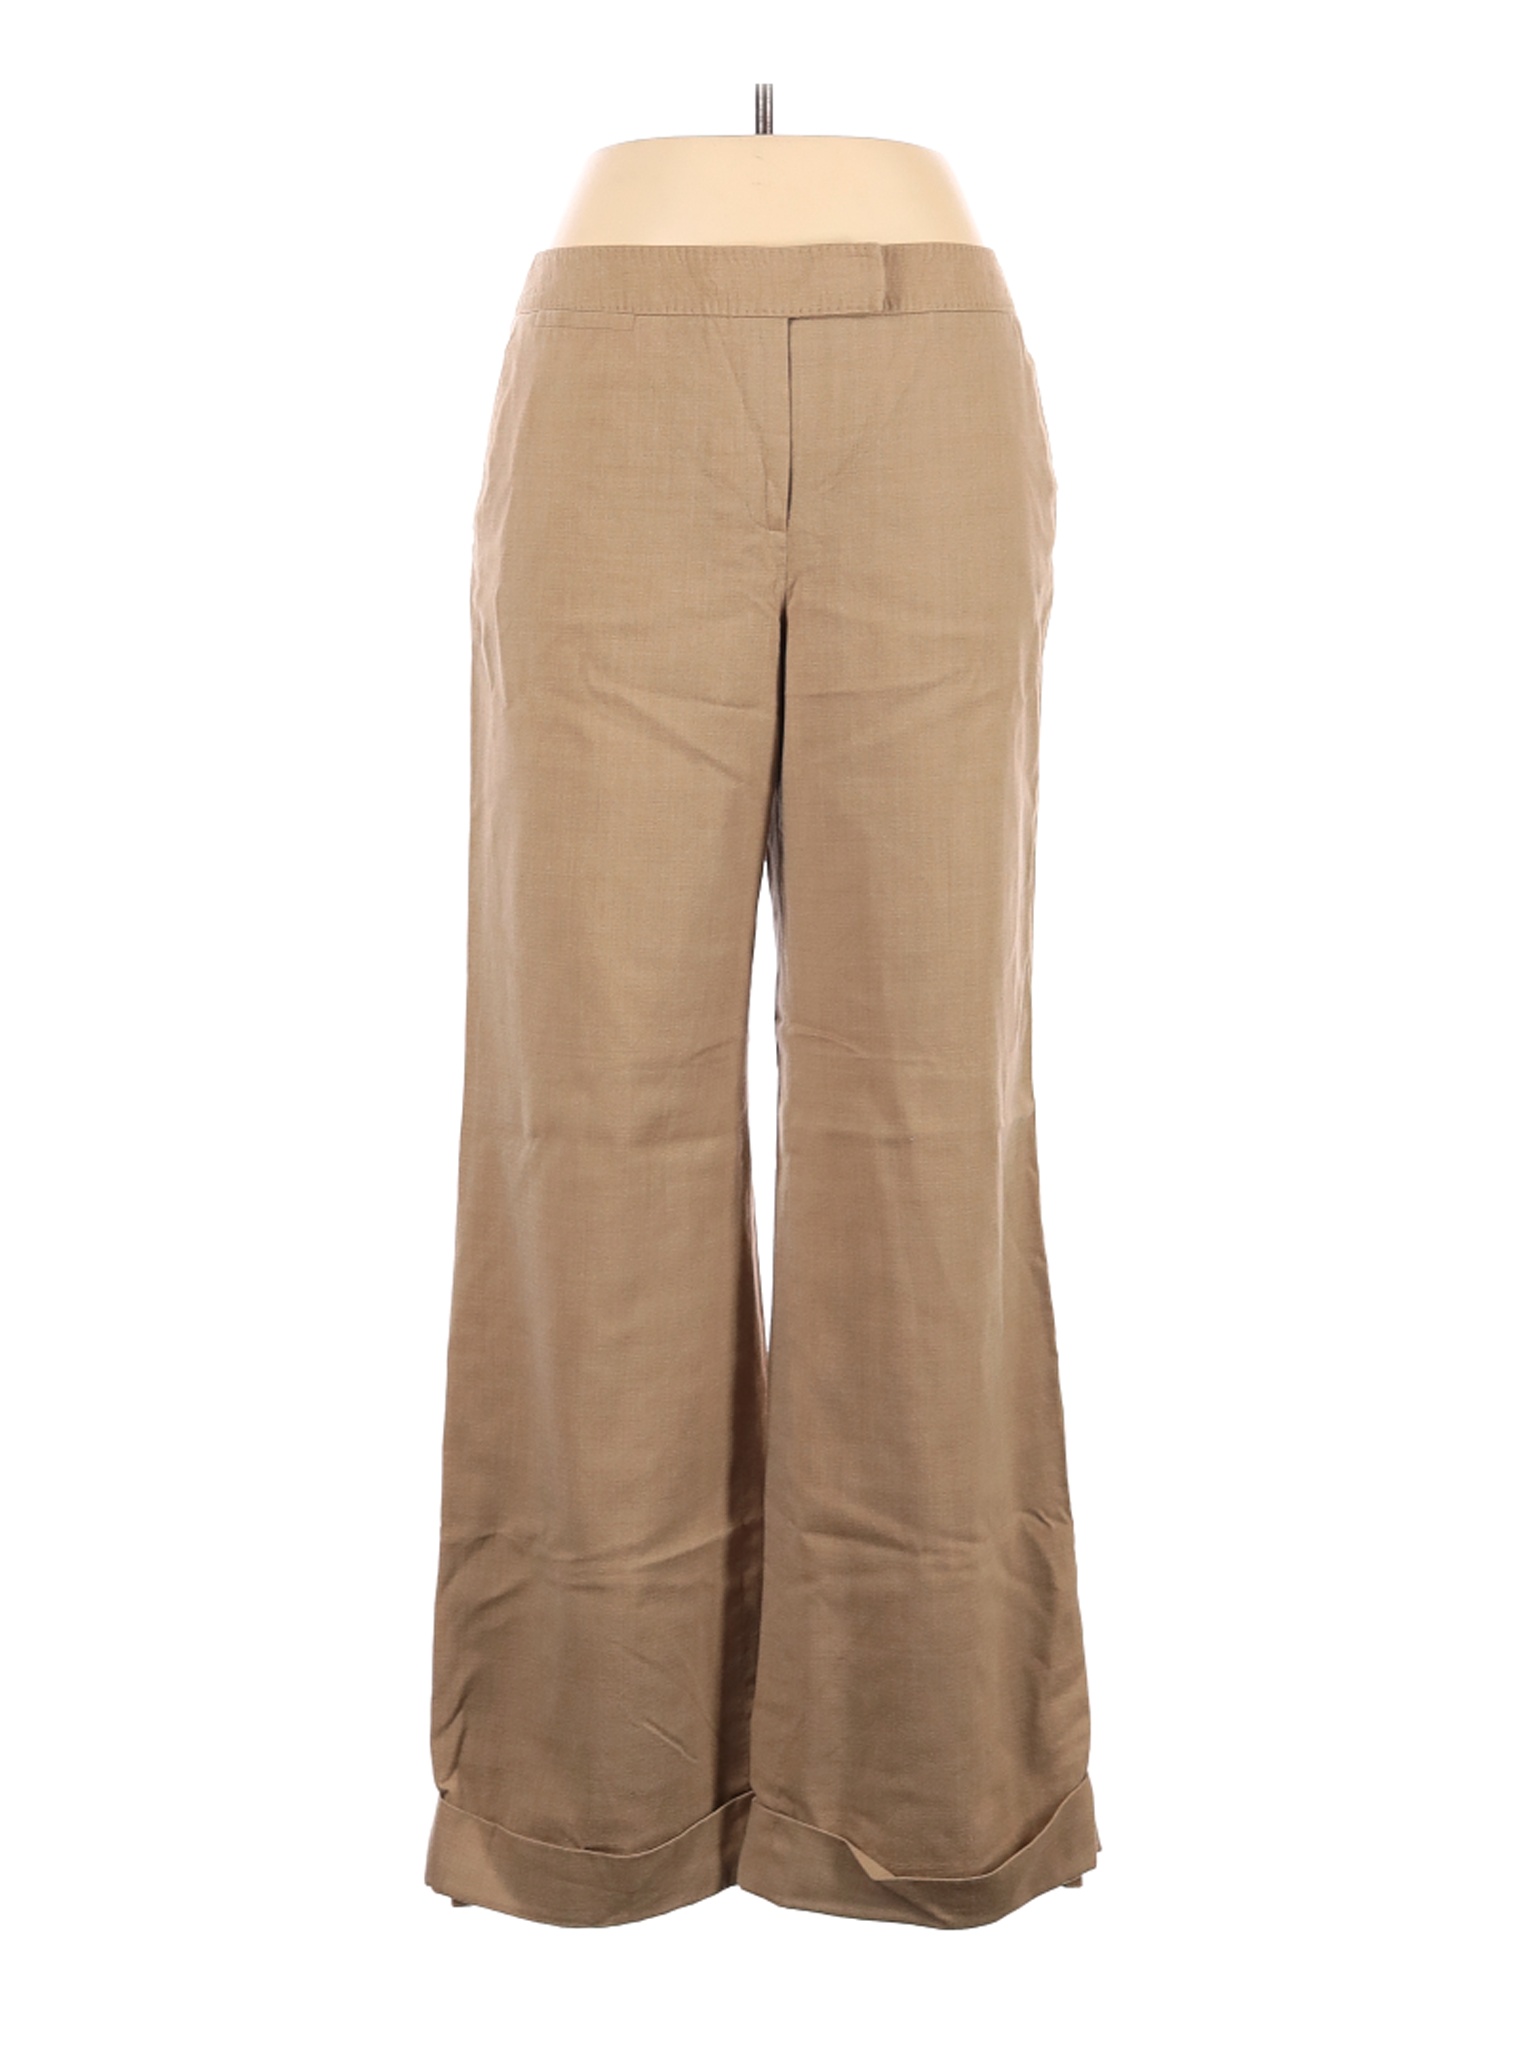 Talbots Women Brown Wool Pants 12 | eBay